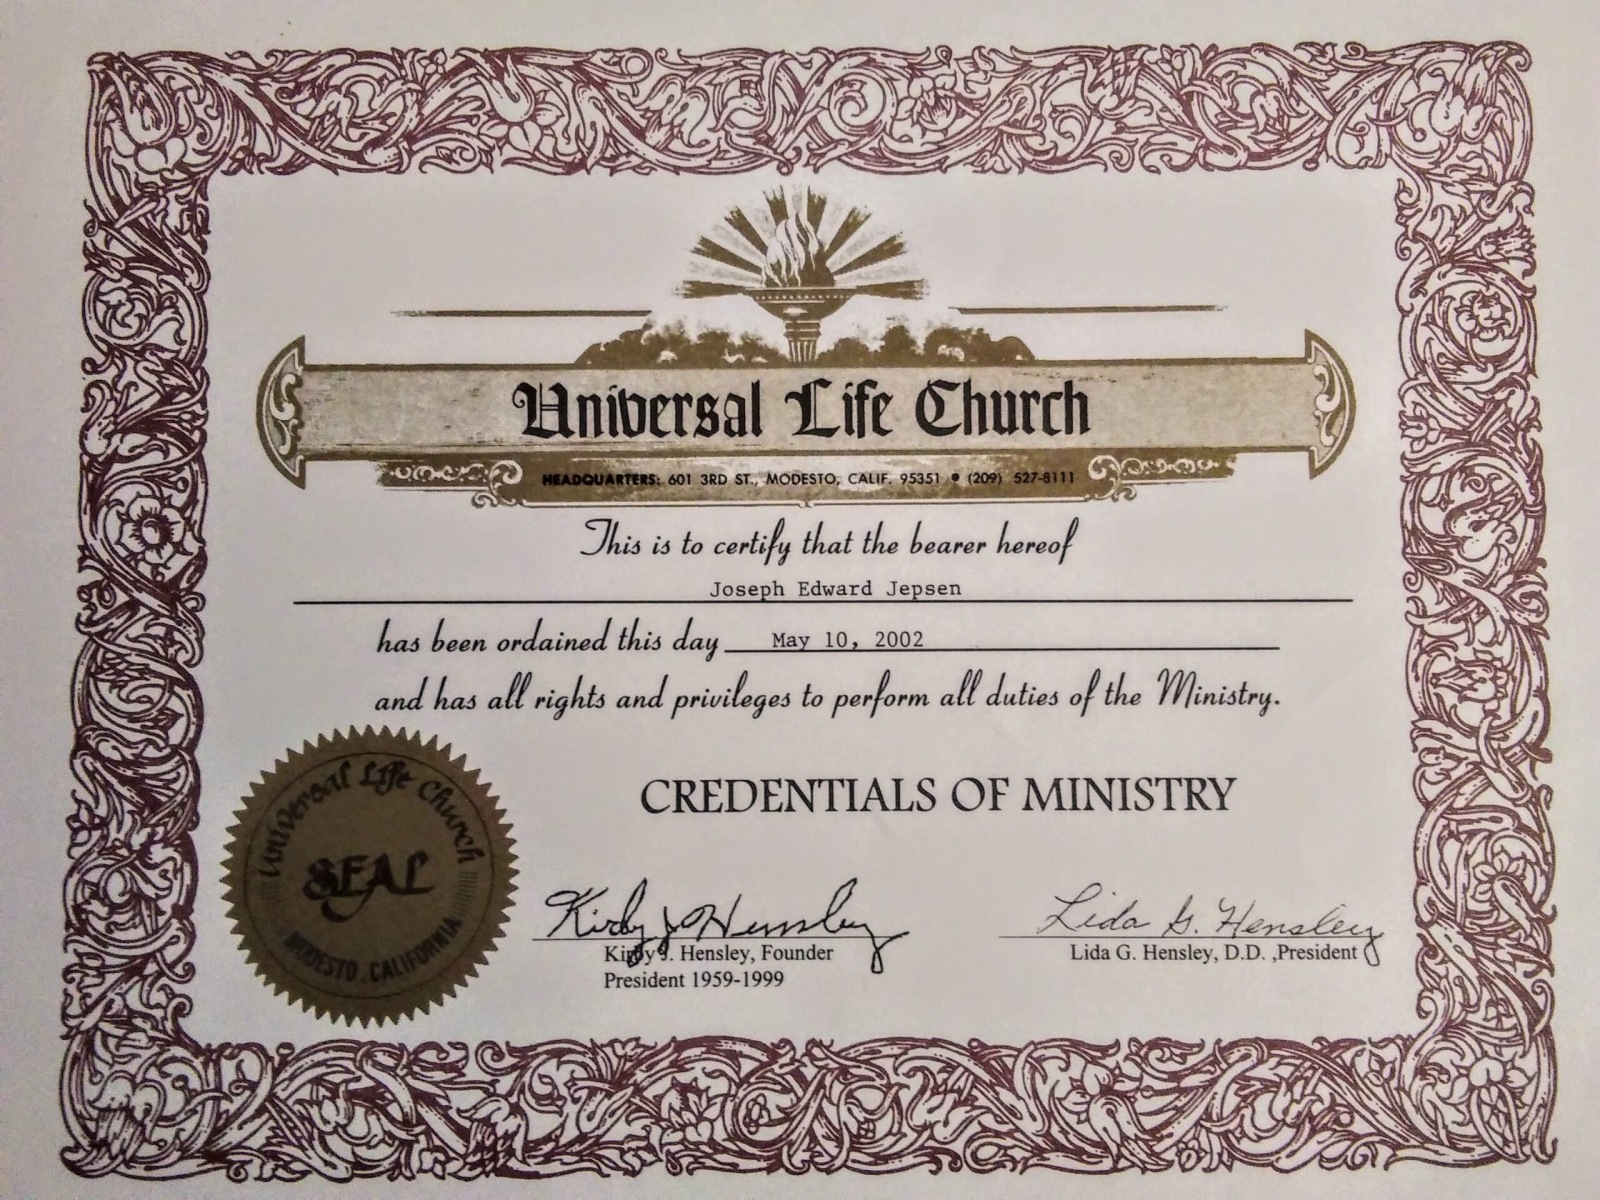 Credentials of Ministry for Joe Jepsen